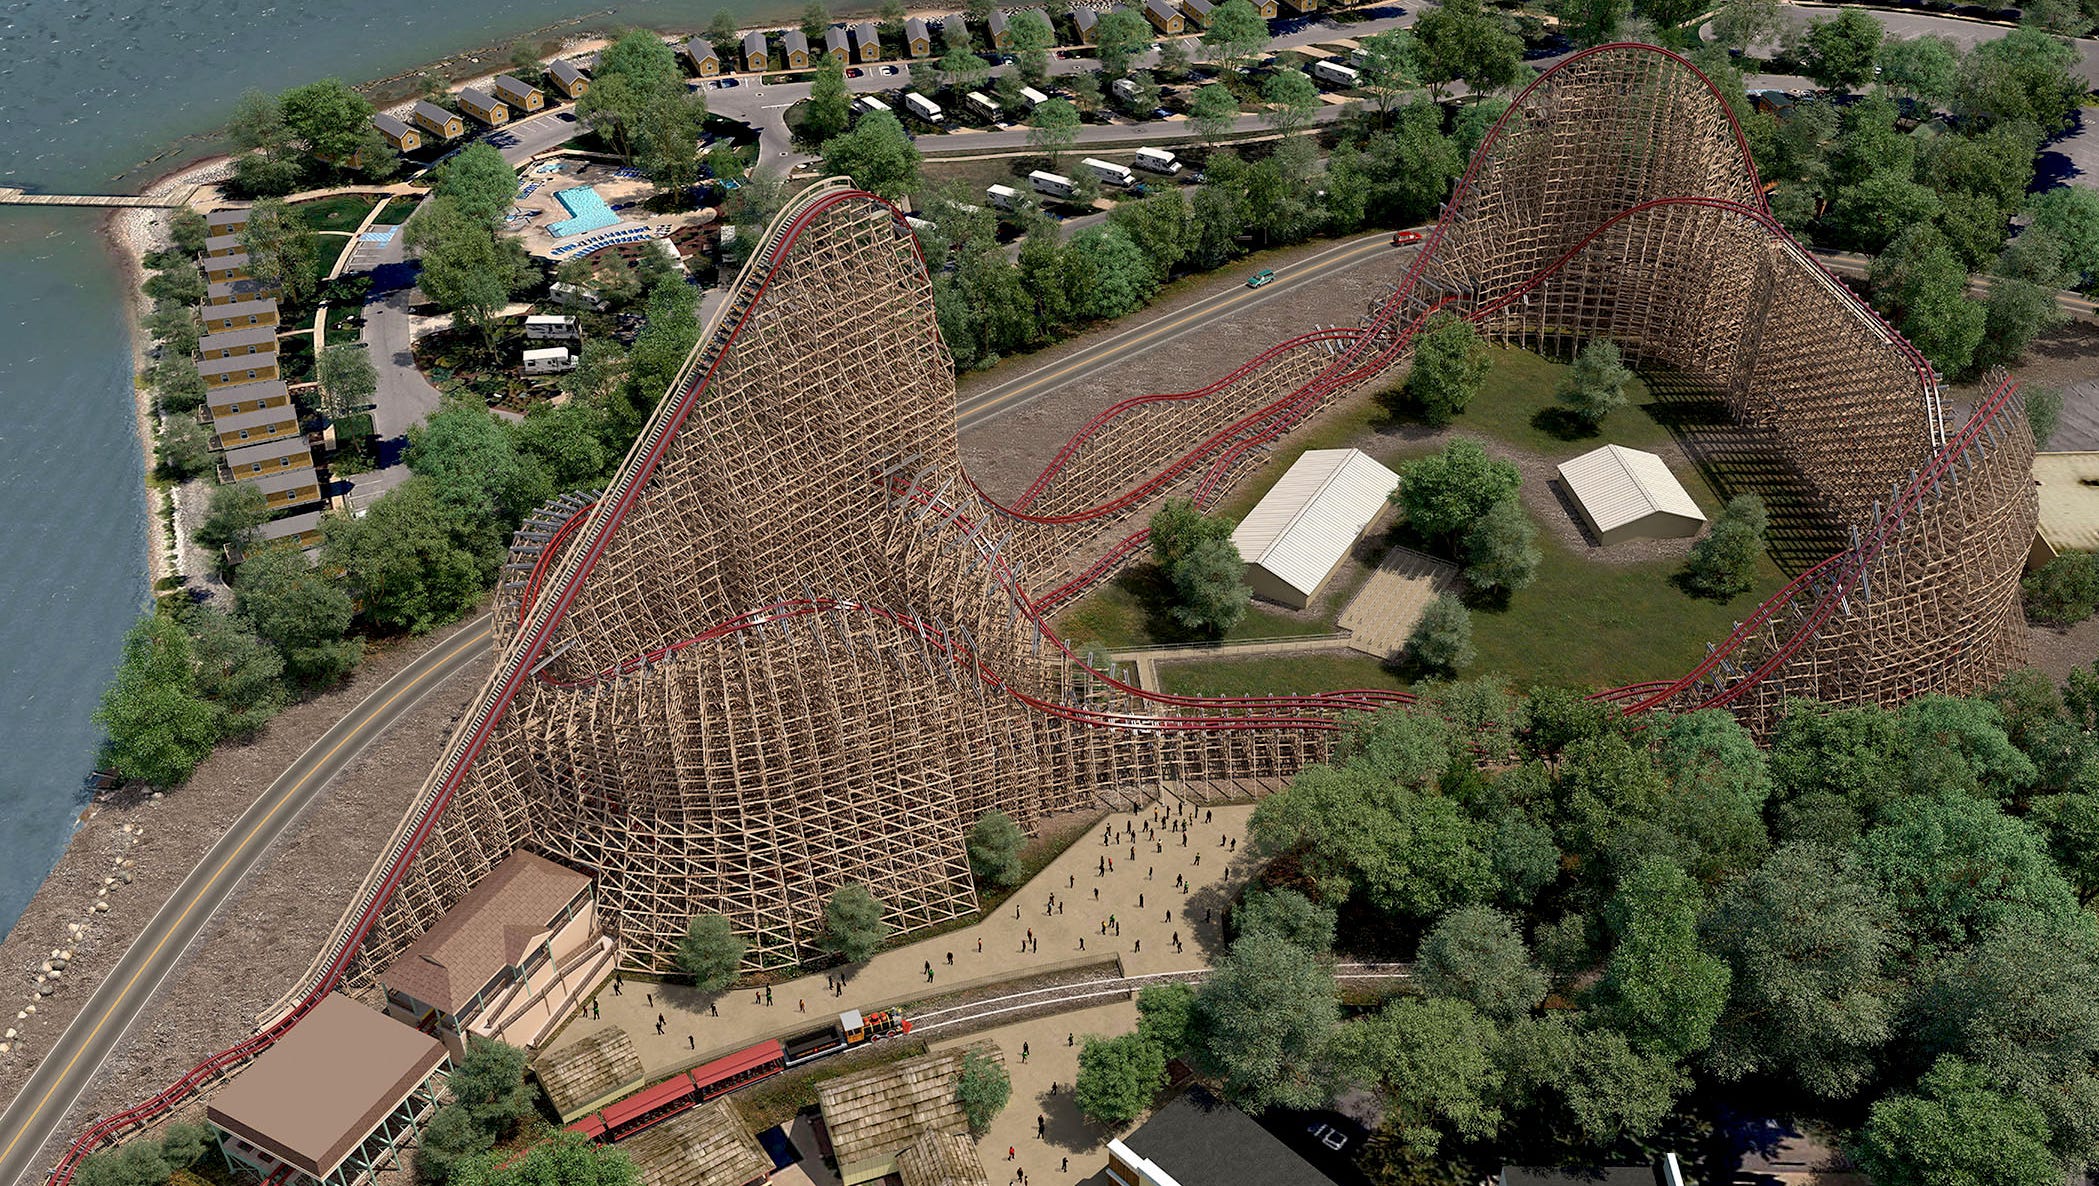 Cedar Point announces new Steel Vengeance roller coaster